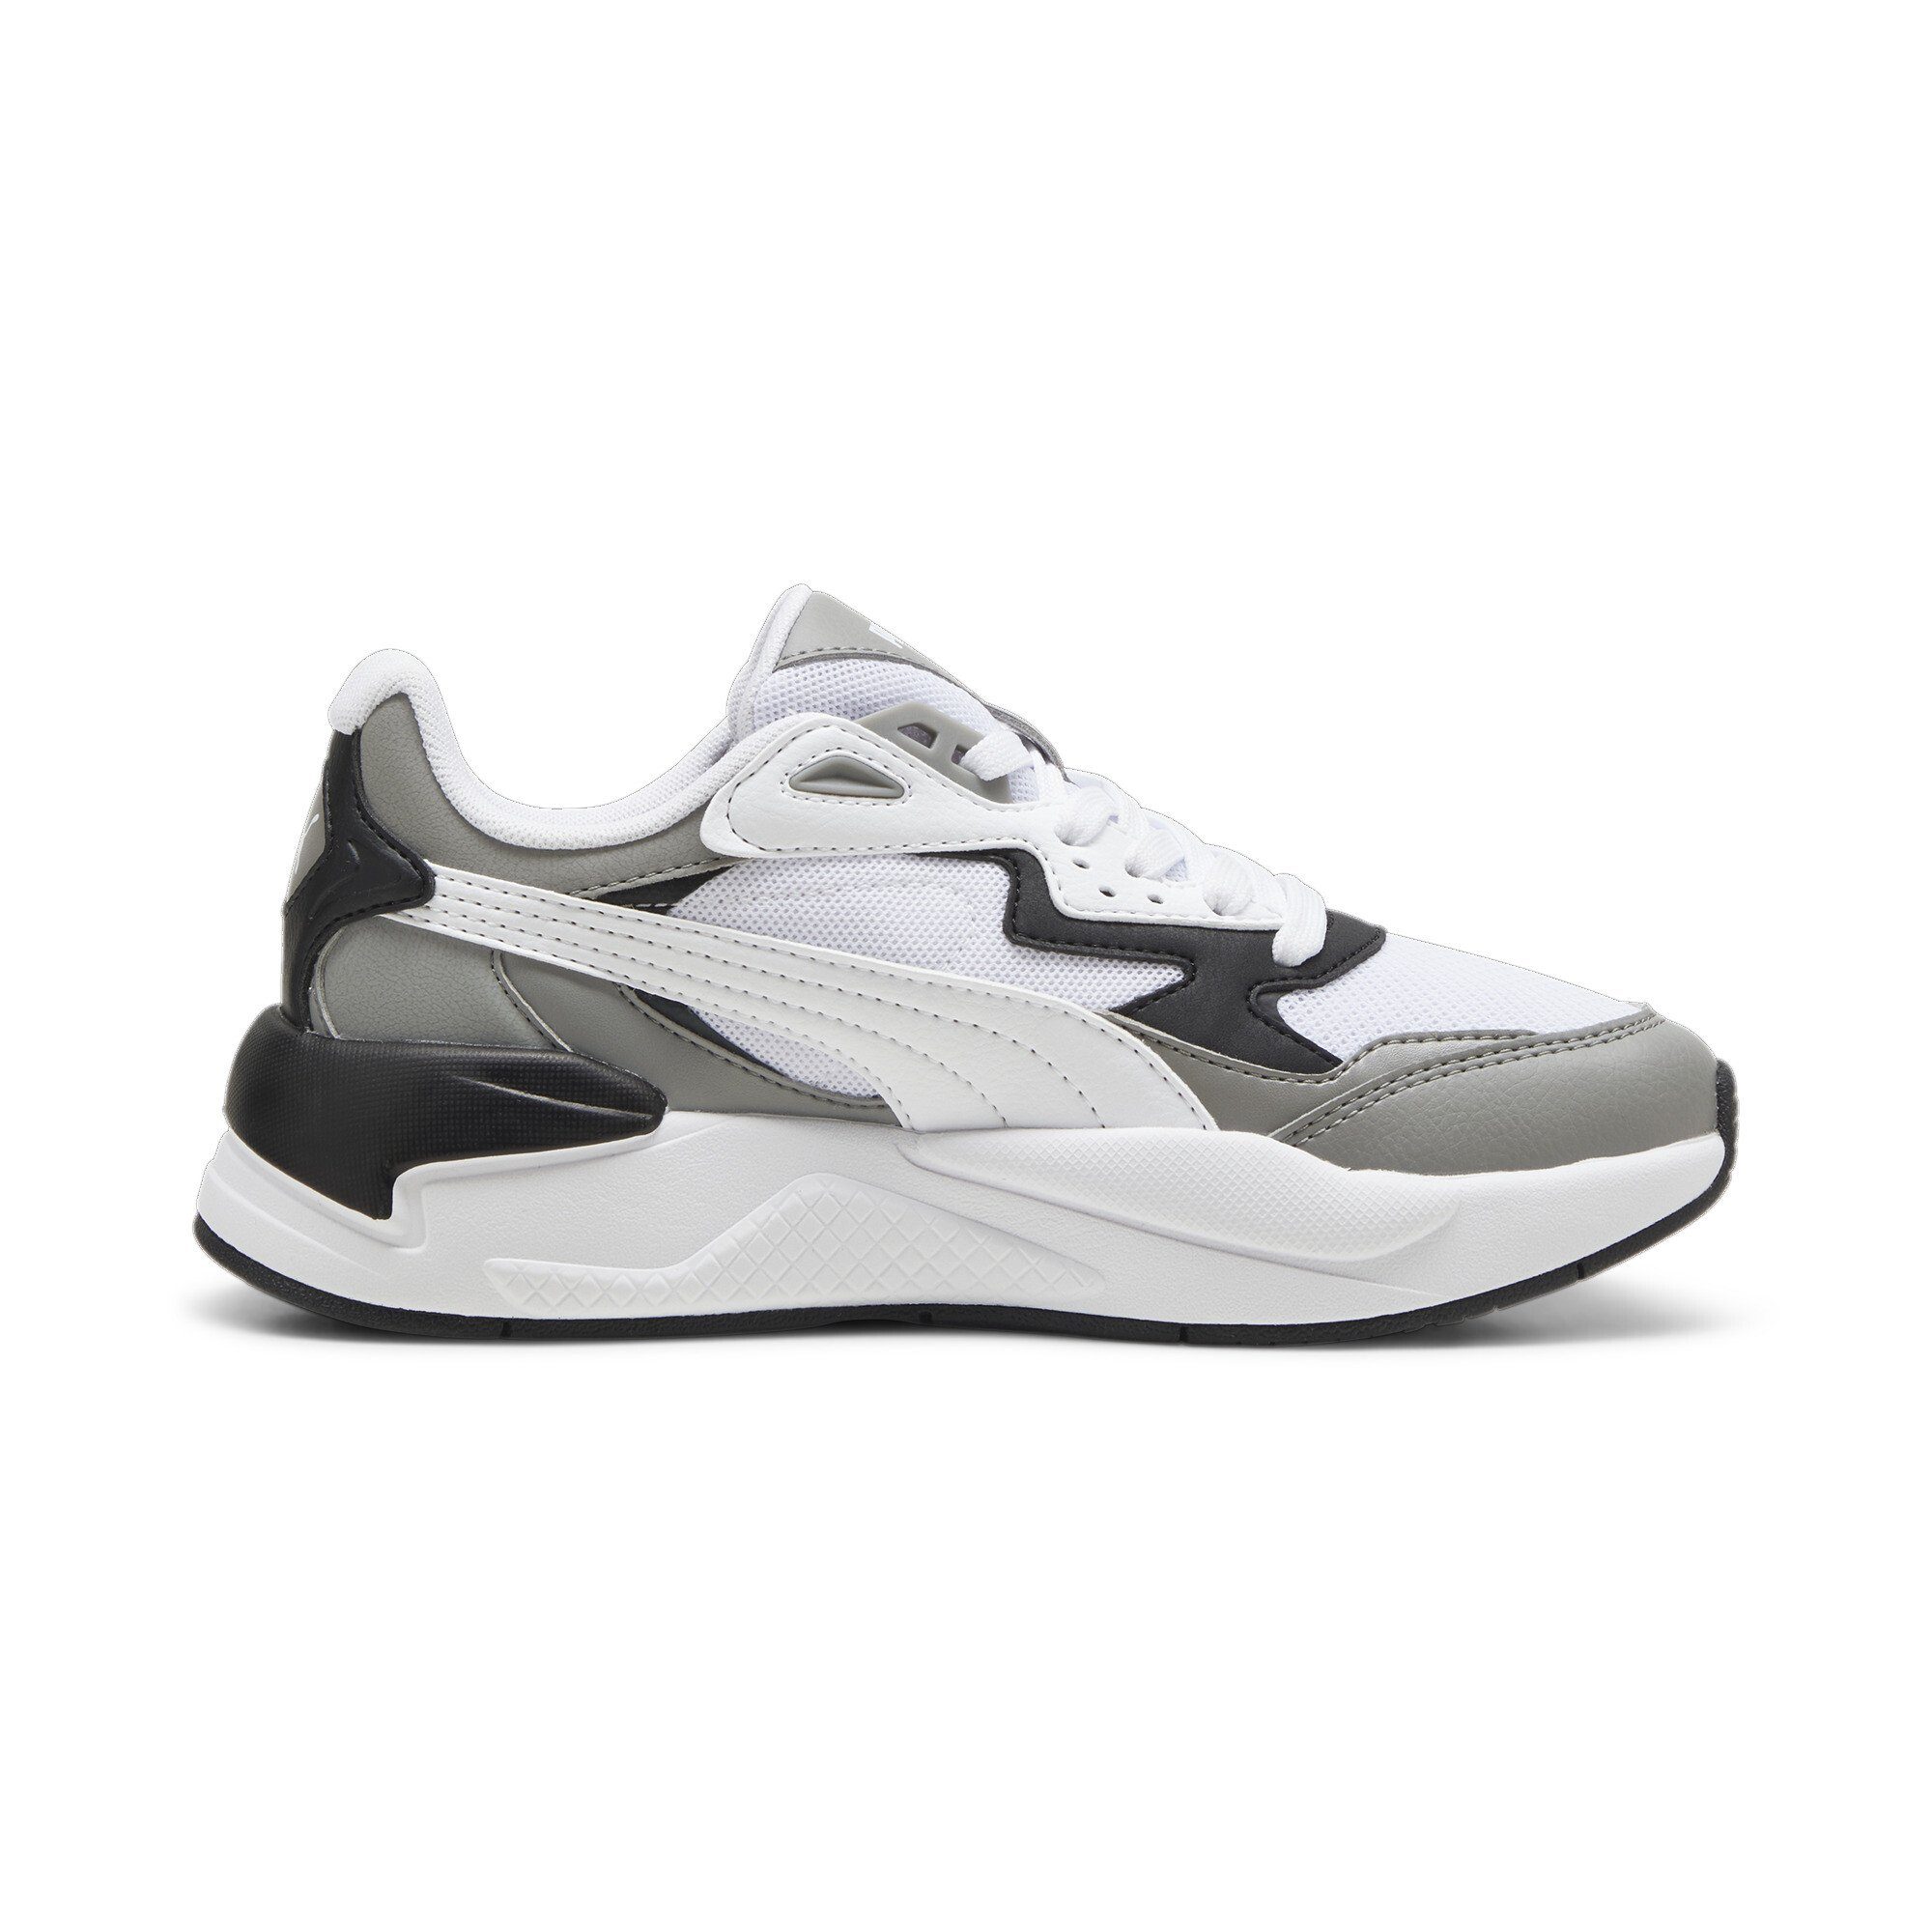 PUMA X-Ray Speed Stormy White Jugendliche Black Slate Sneakers Sneaker Gray